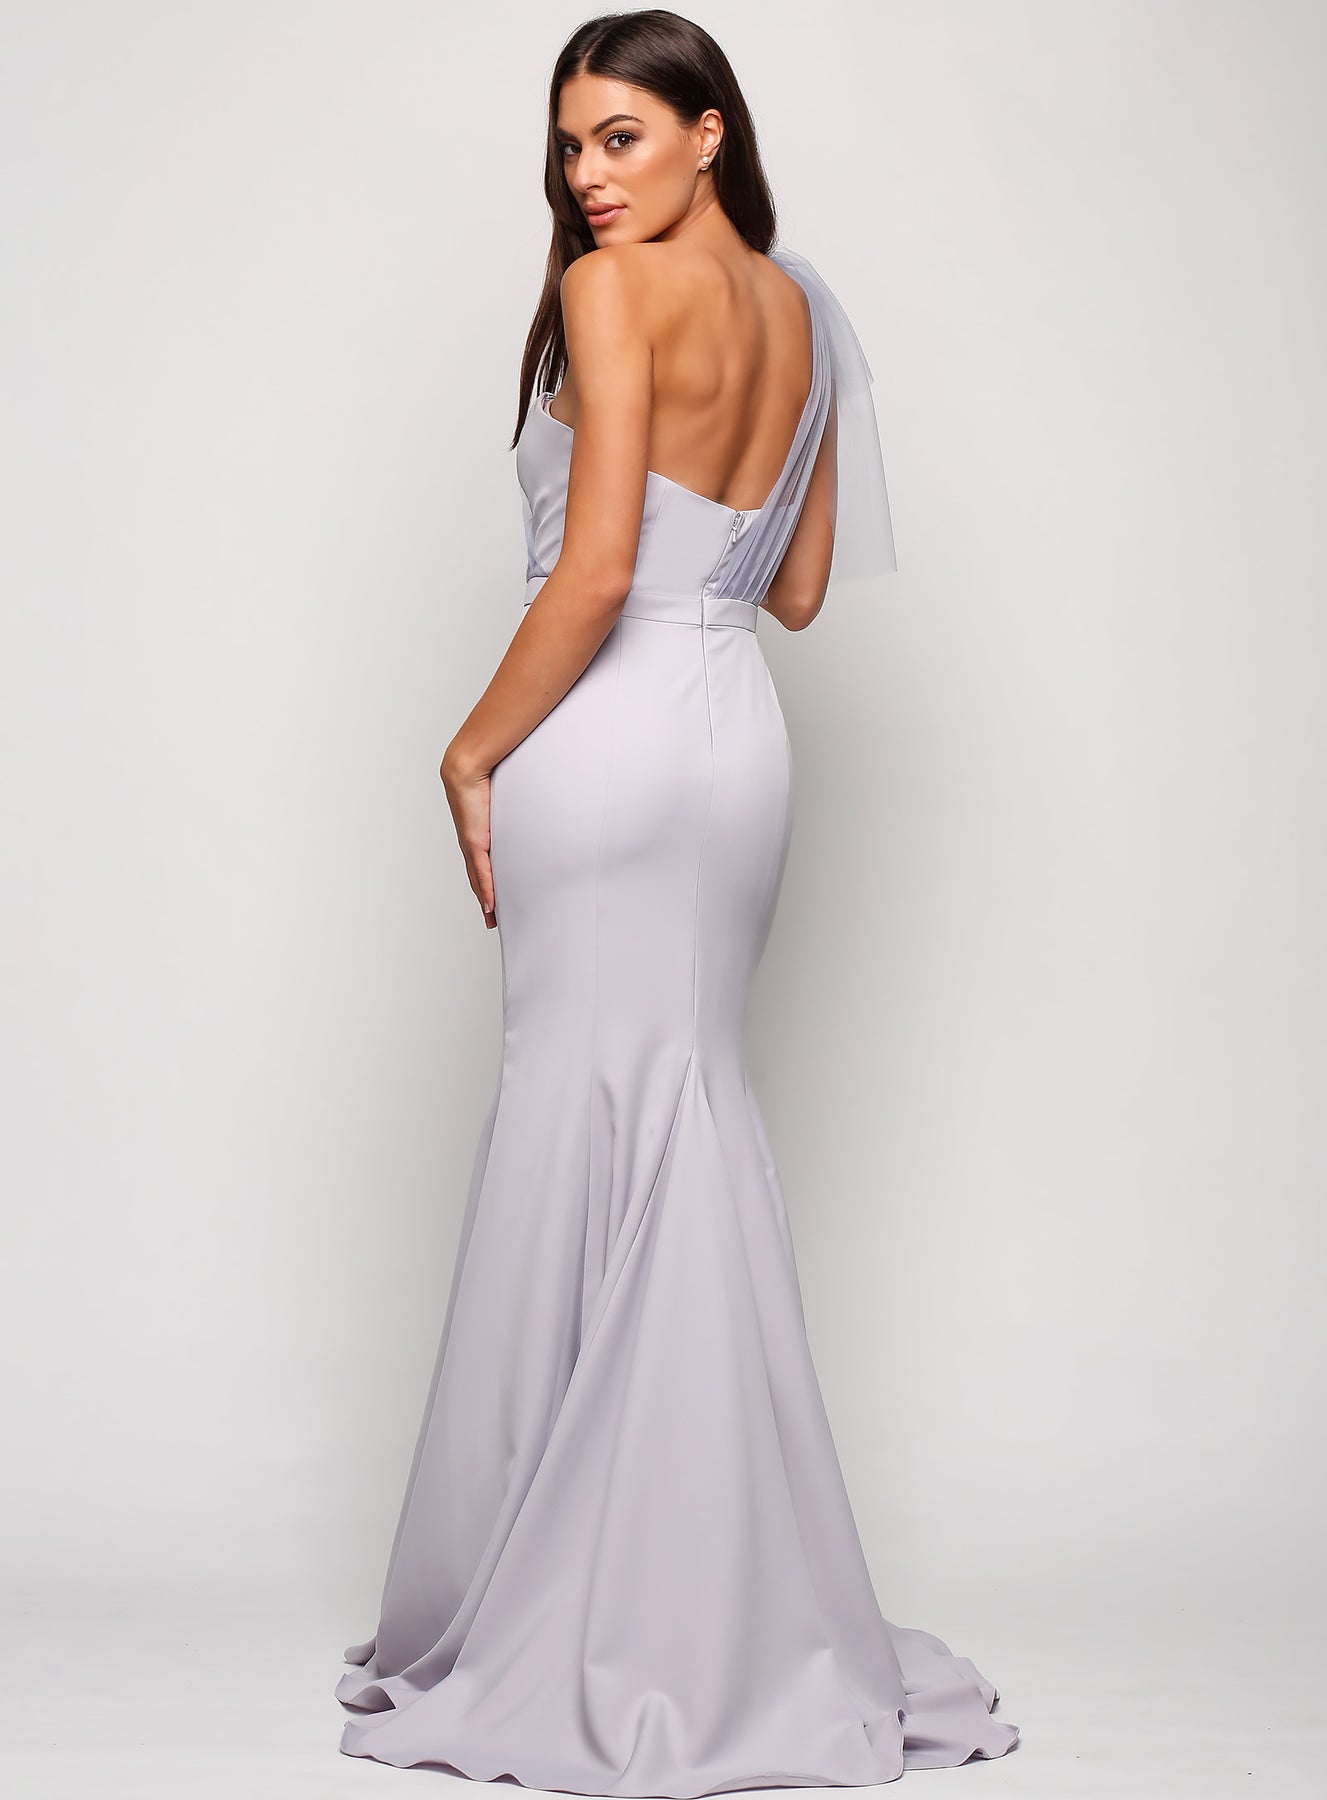 Marissa One Shoulder Tulle Dress by Samantha Rose – White Runway